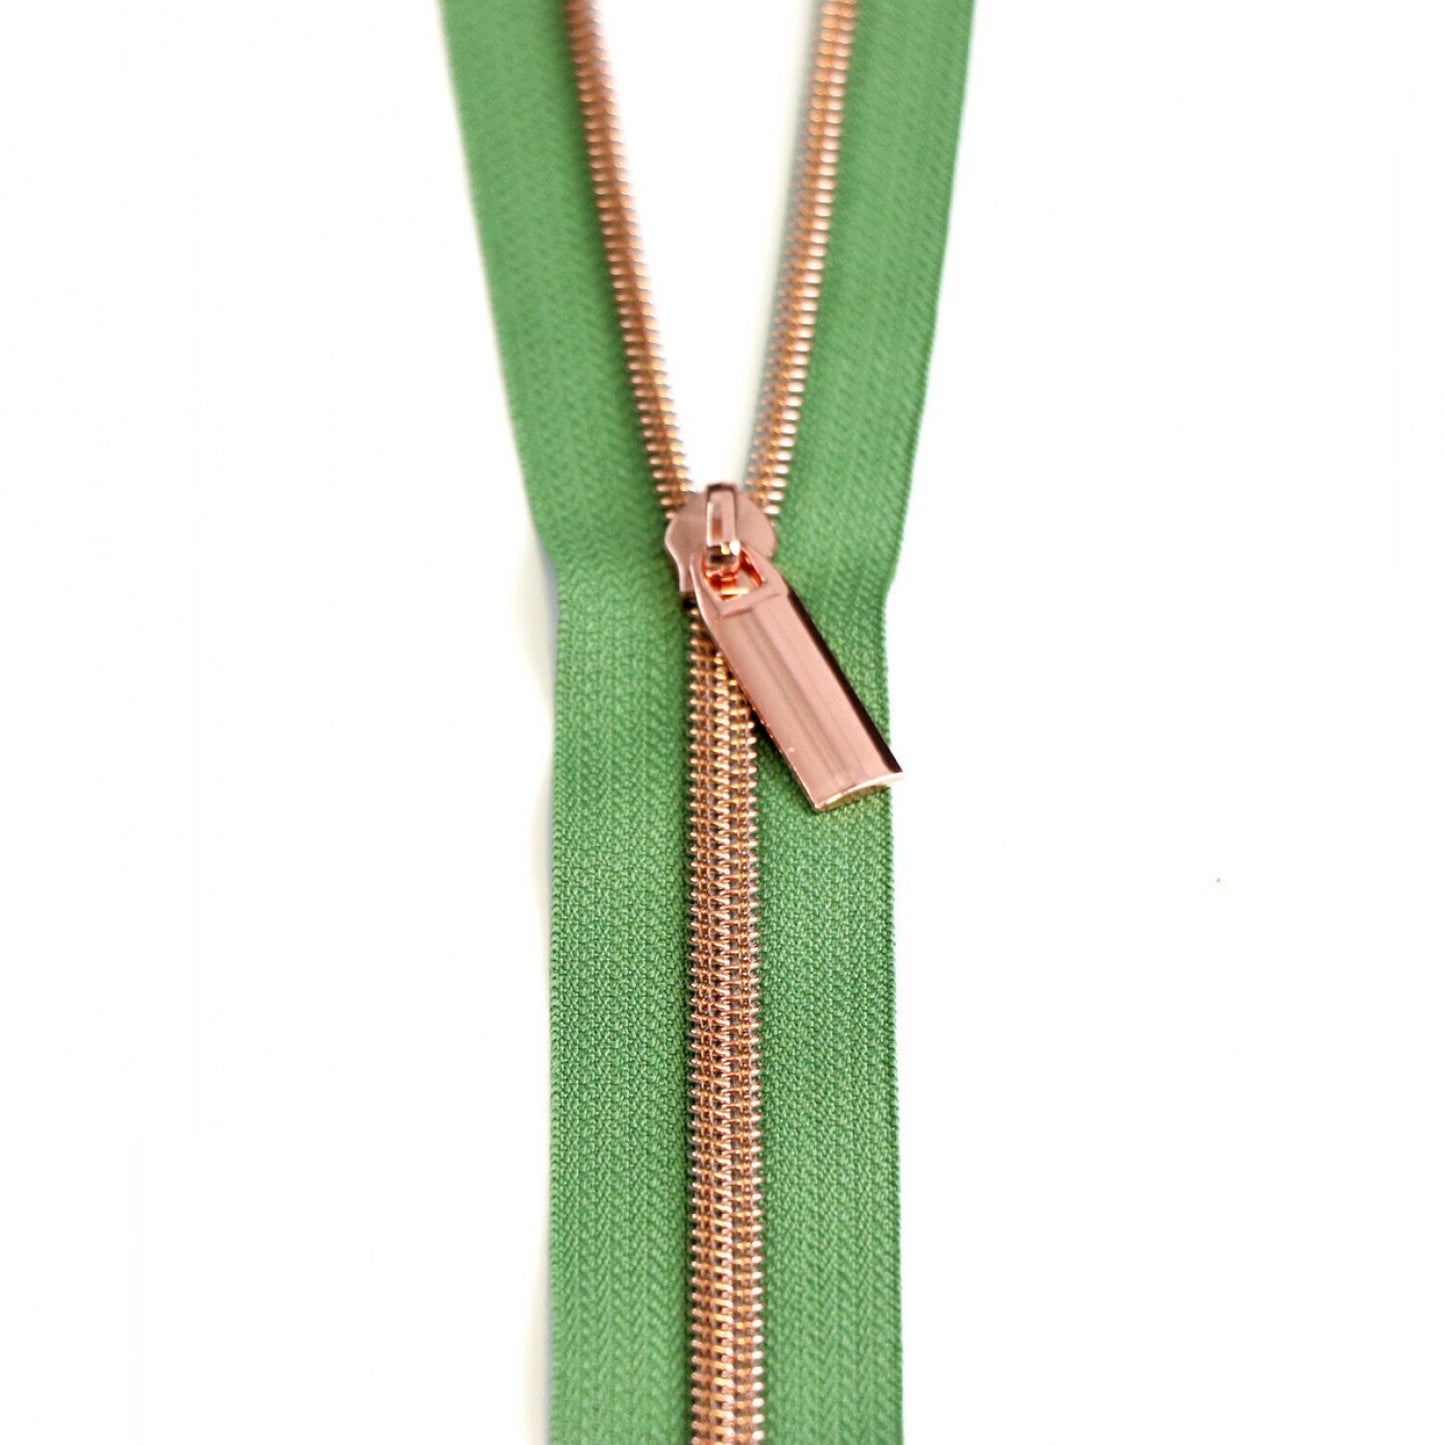 Green Zipper Tape - Sallie Tomato Zipper - Magnolia Zipper Tape - Choose Teeth Color - 3 Yards - 108 inches